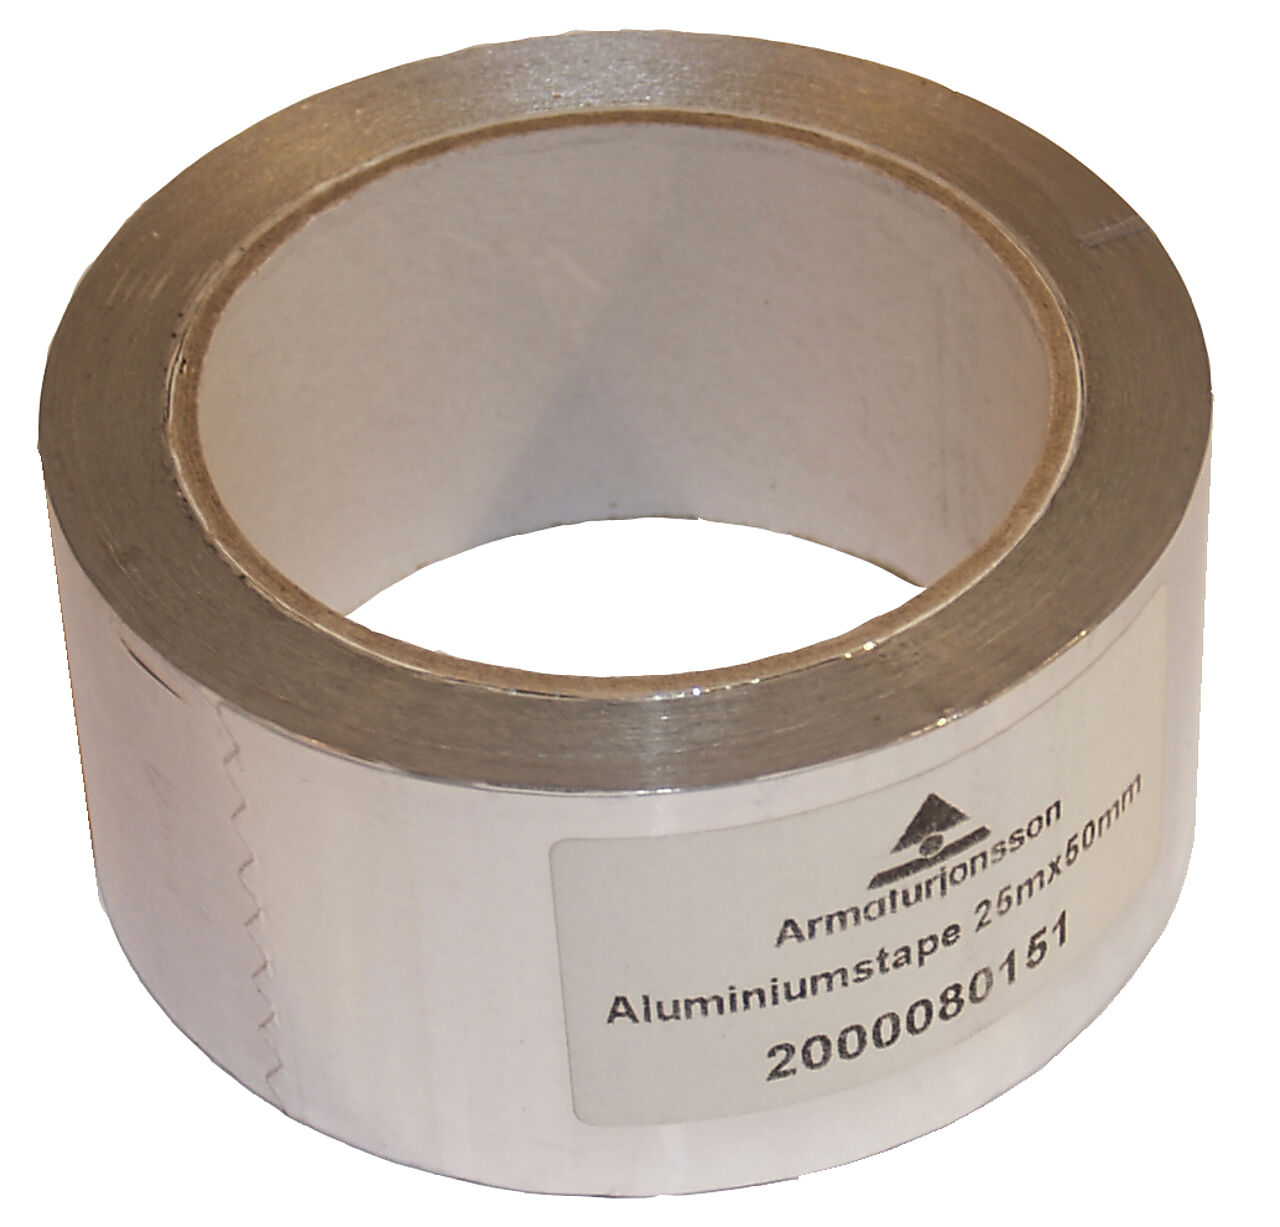 Armaturjonsson Aluminiumstape, 25 m x 50 mm 1